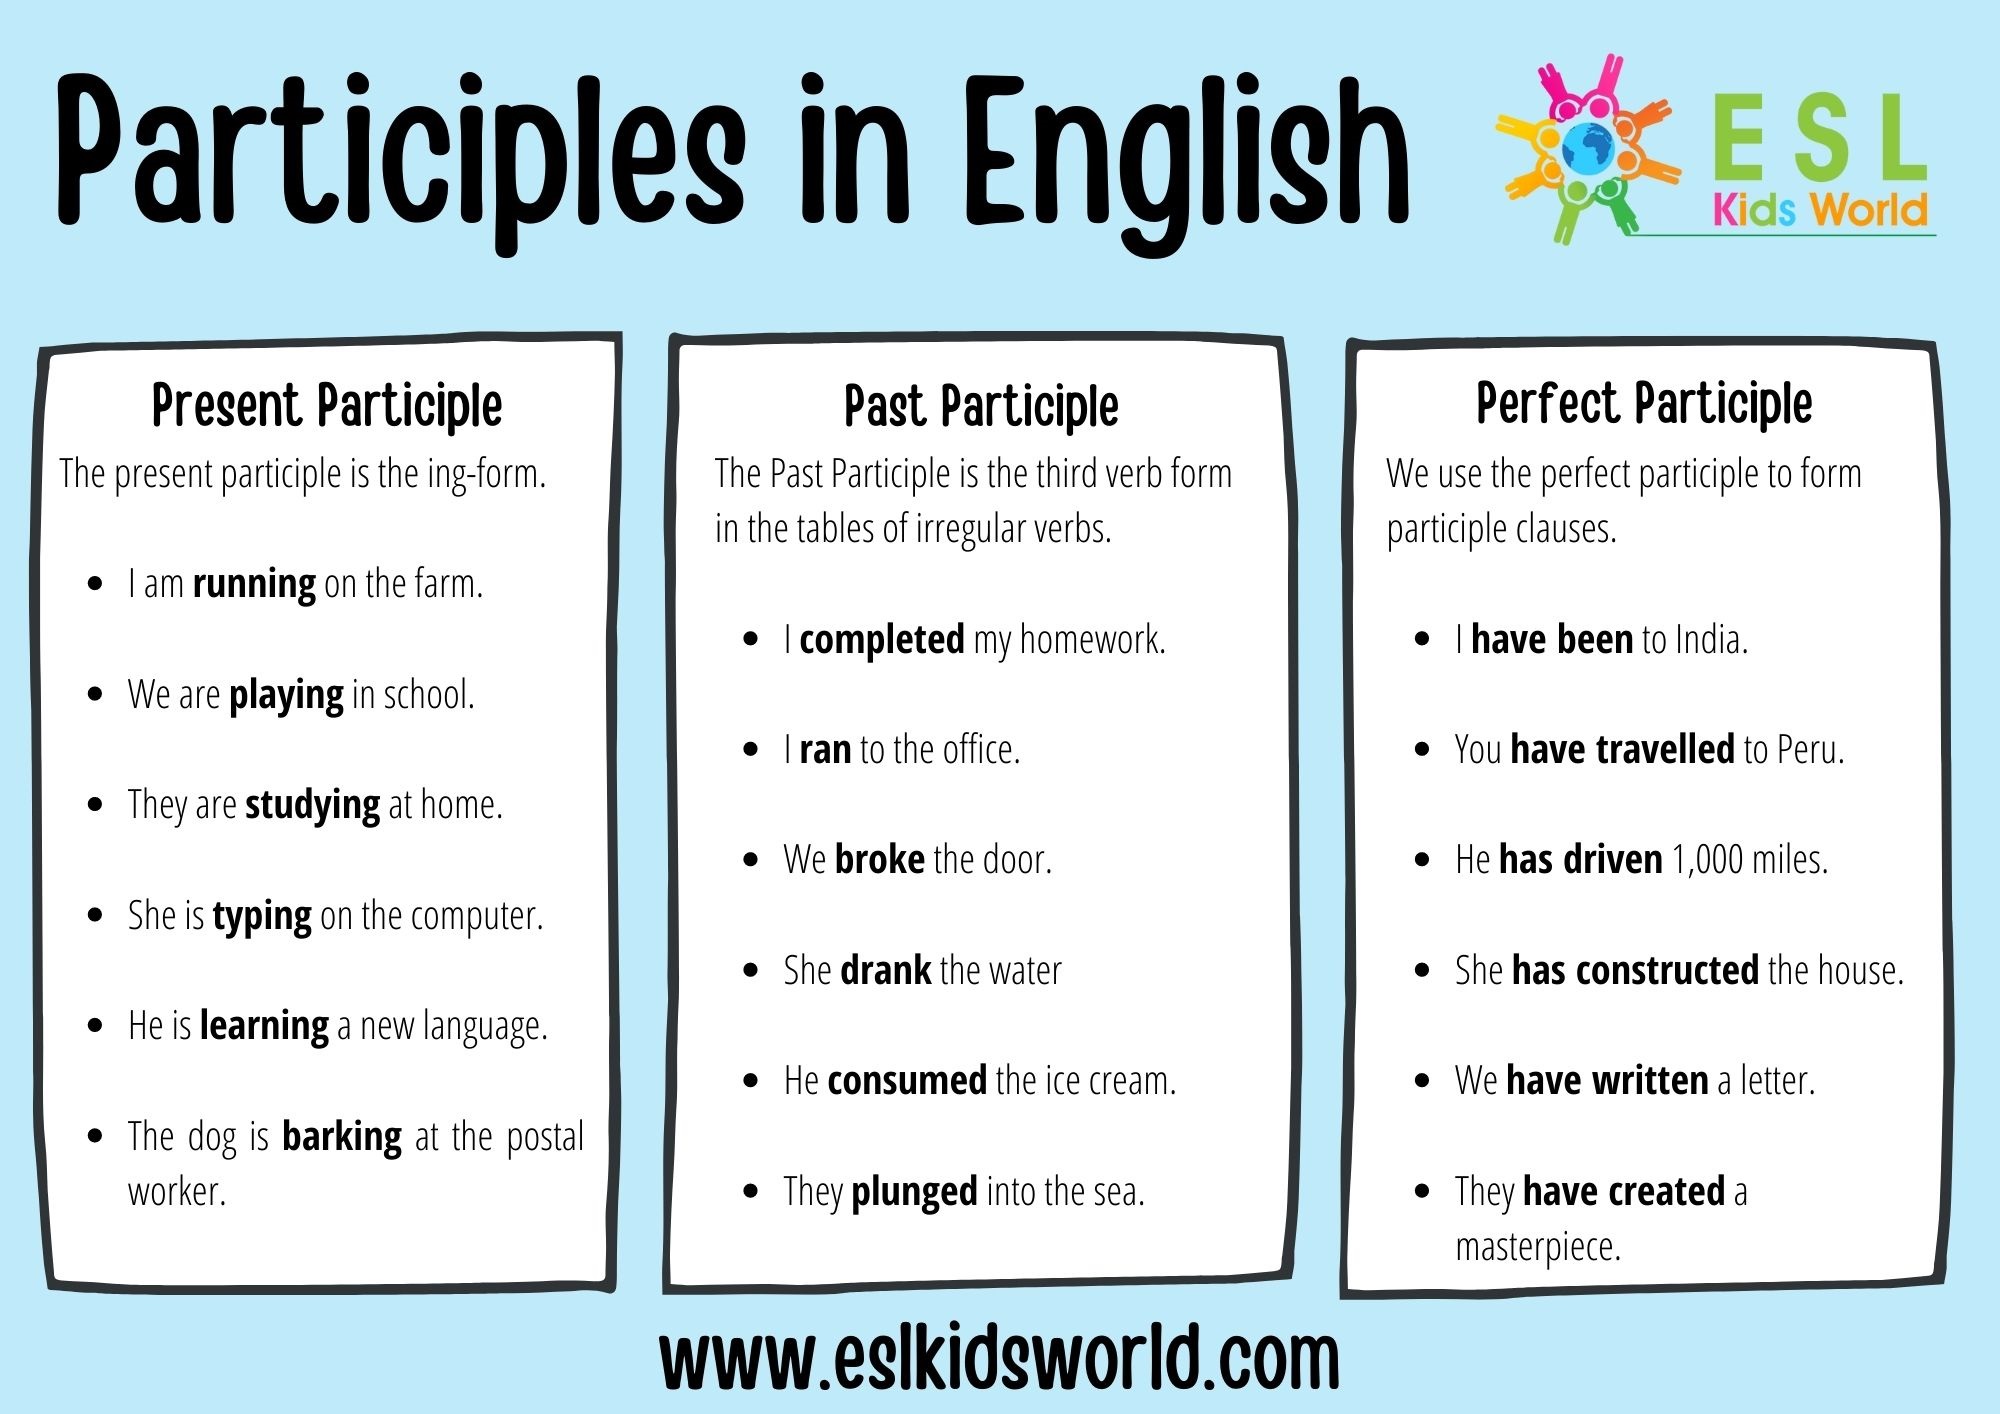 Participle Examples, What is a Participle?